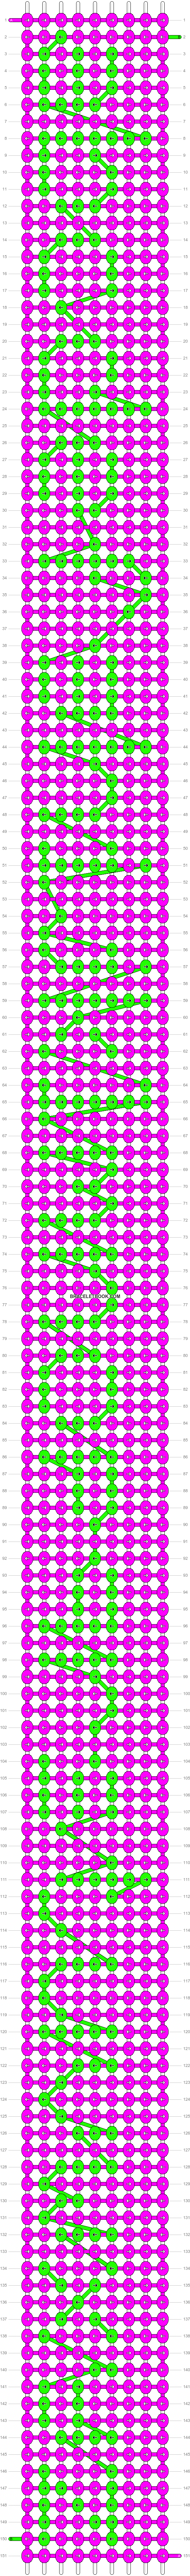 Alpha pattern #46535 variation #78392 pattern